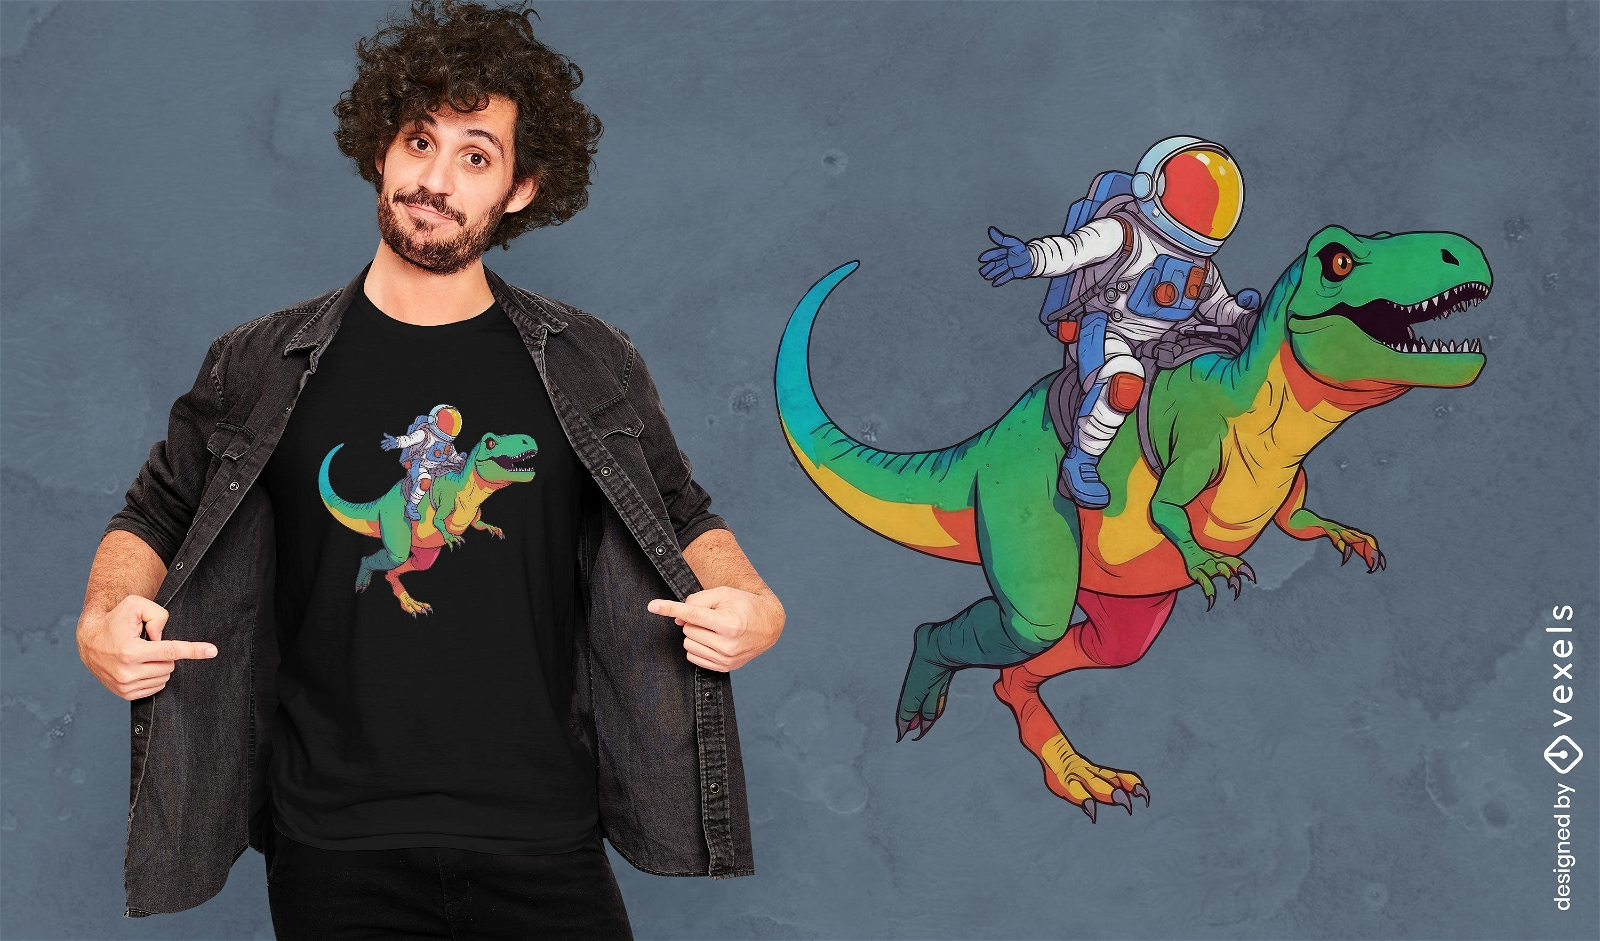 Dinosaur riding astronaut t-shirt design